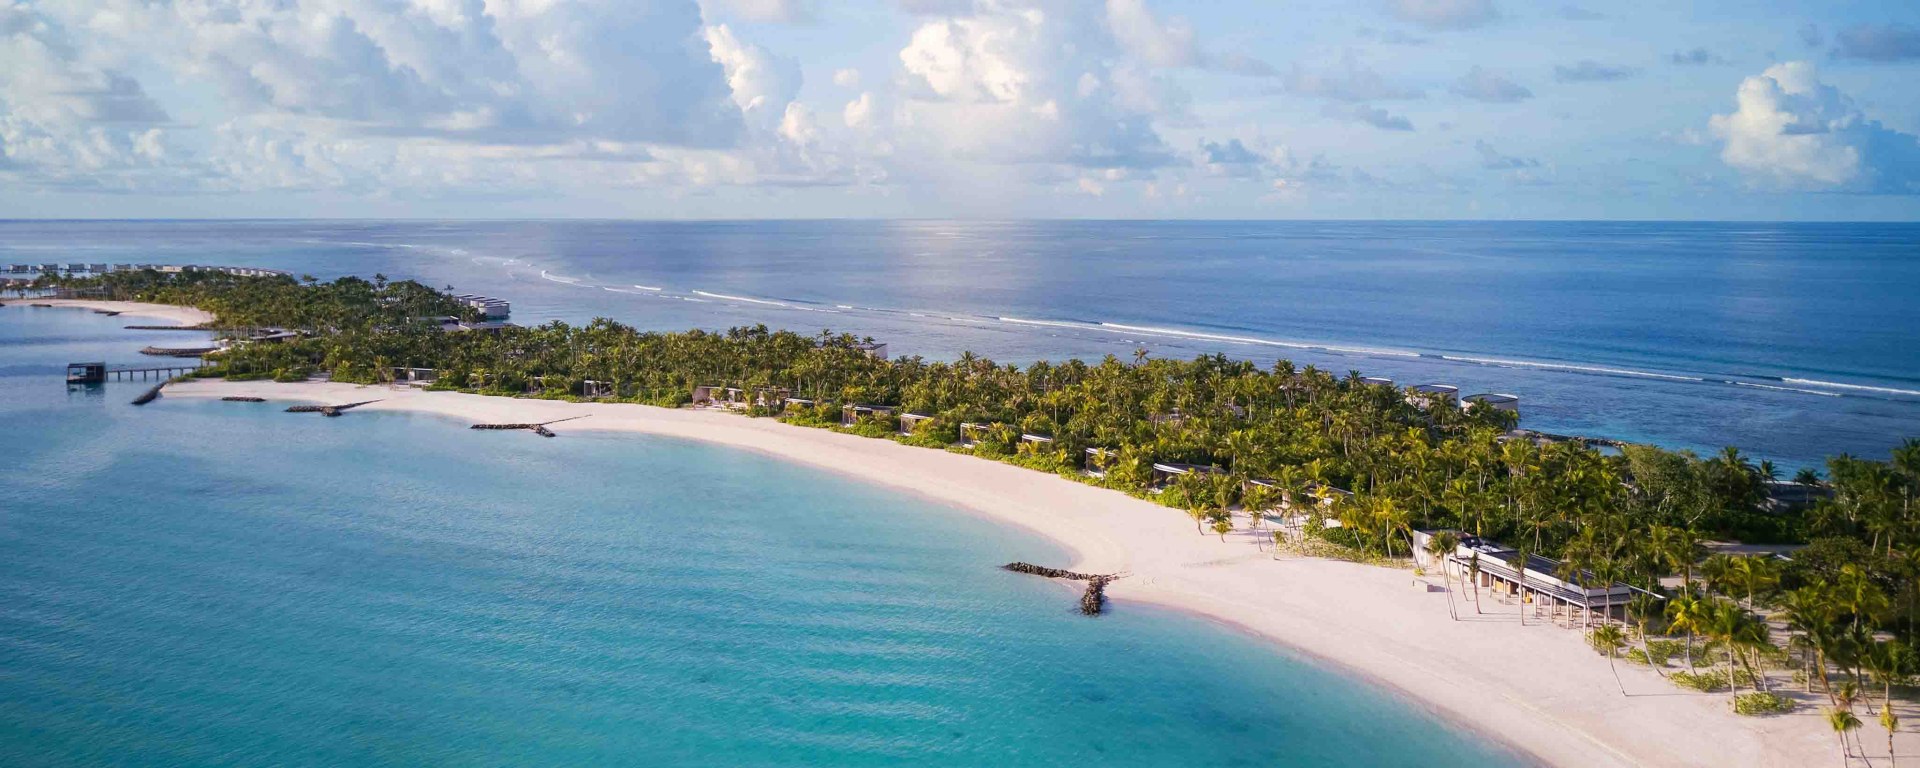 Malediven Hoteleröffnung - The Ritz Carlton Maldives Fari Islands